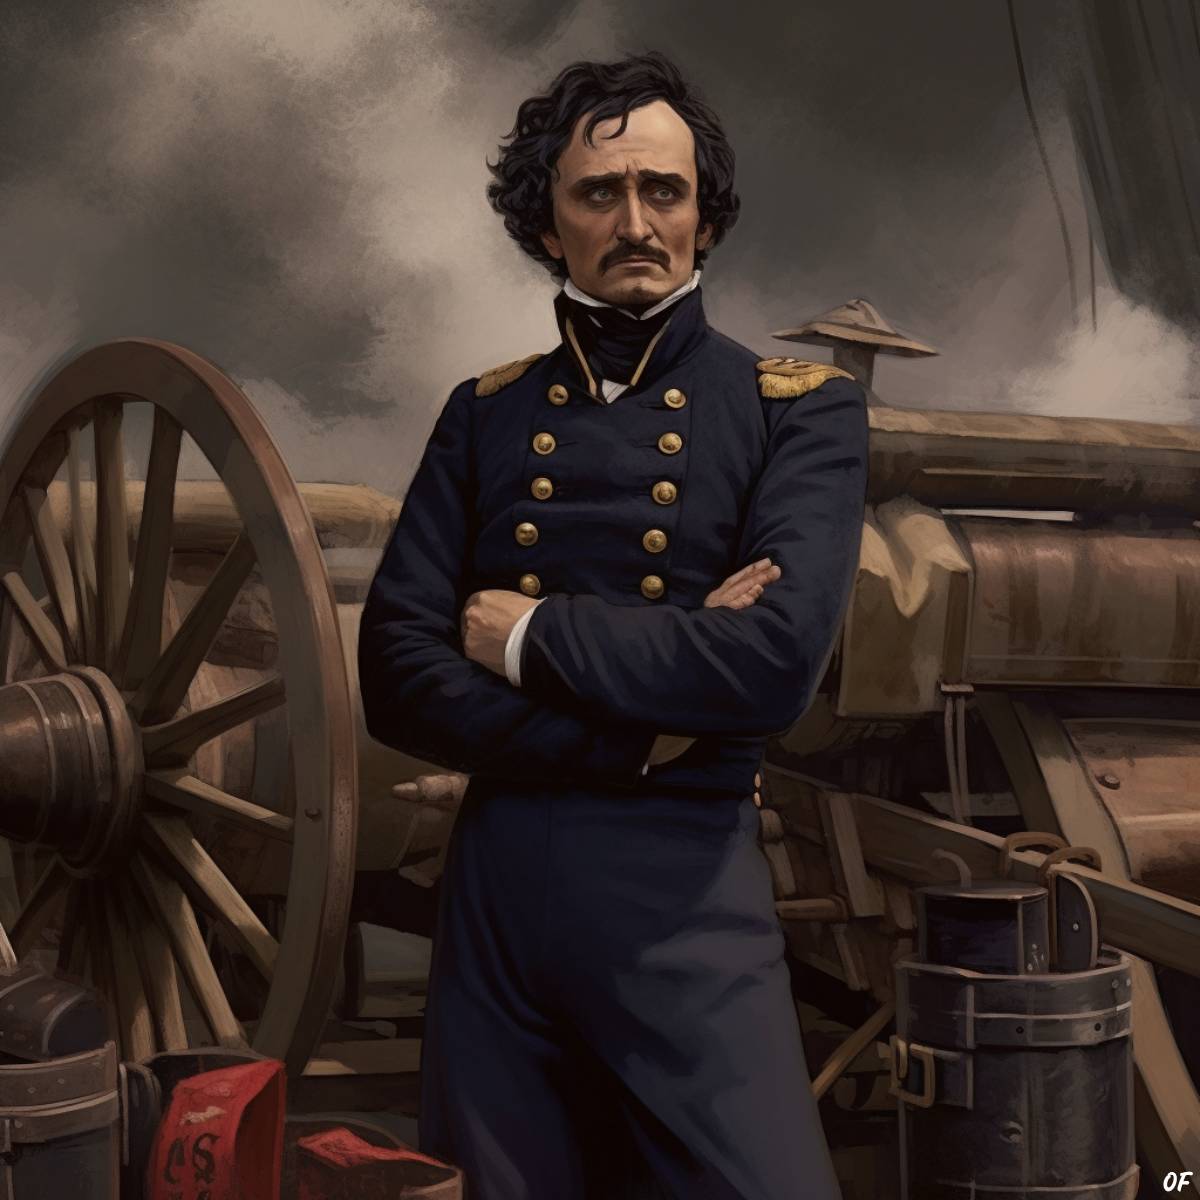 Edgar Allan Poe in military uniform.